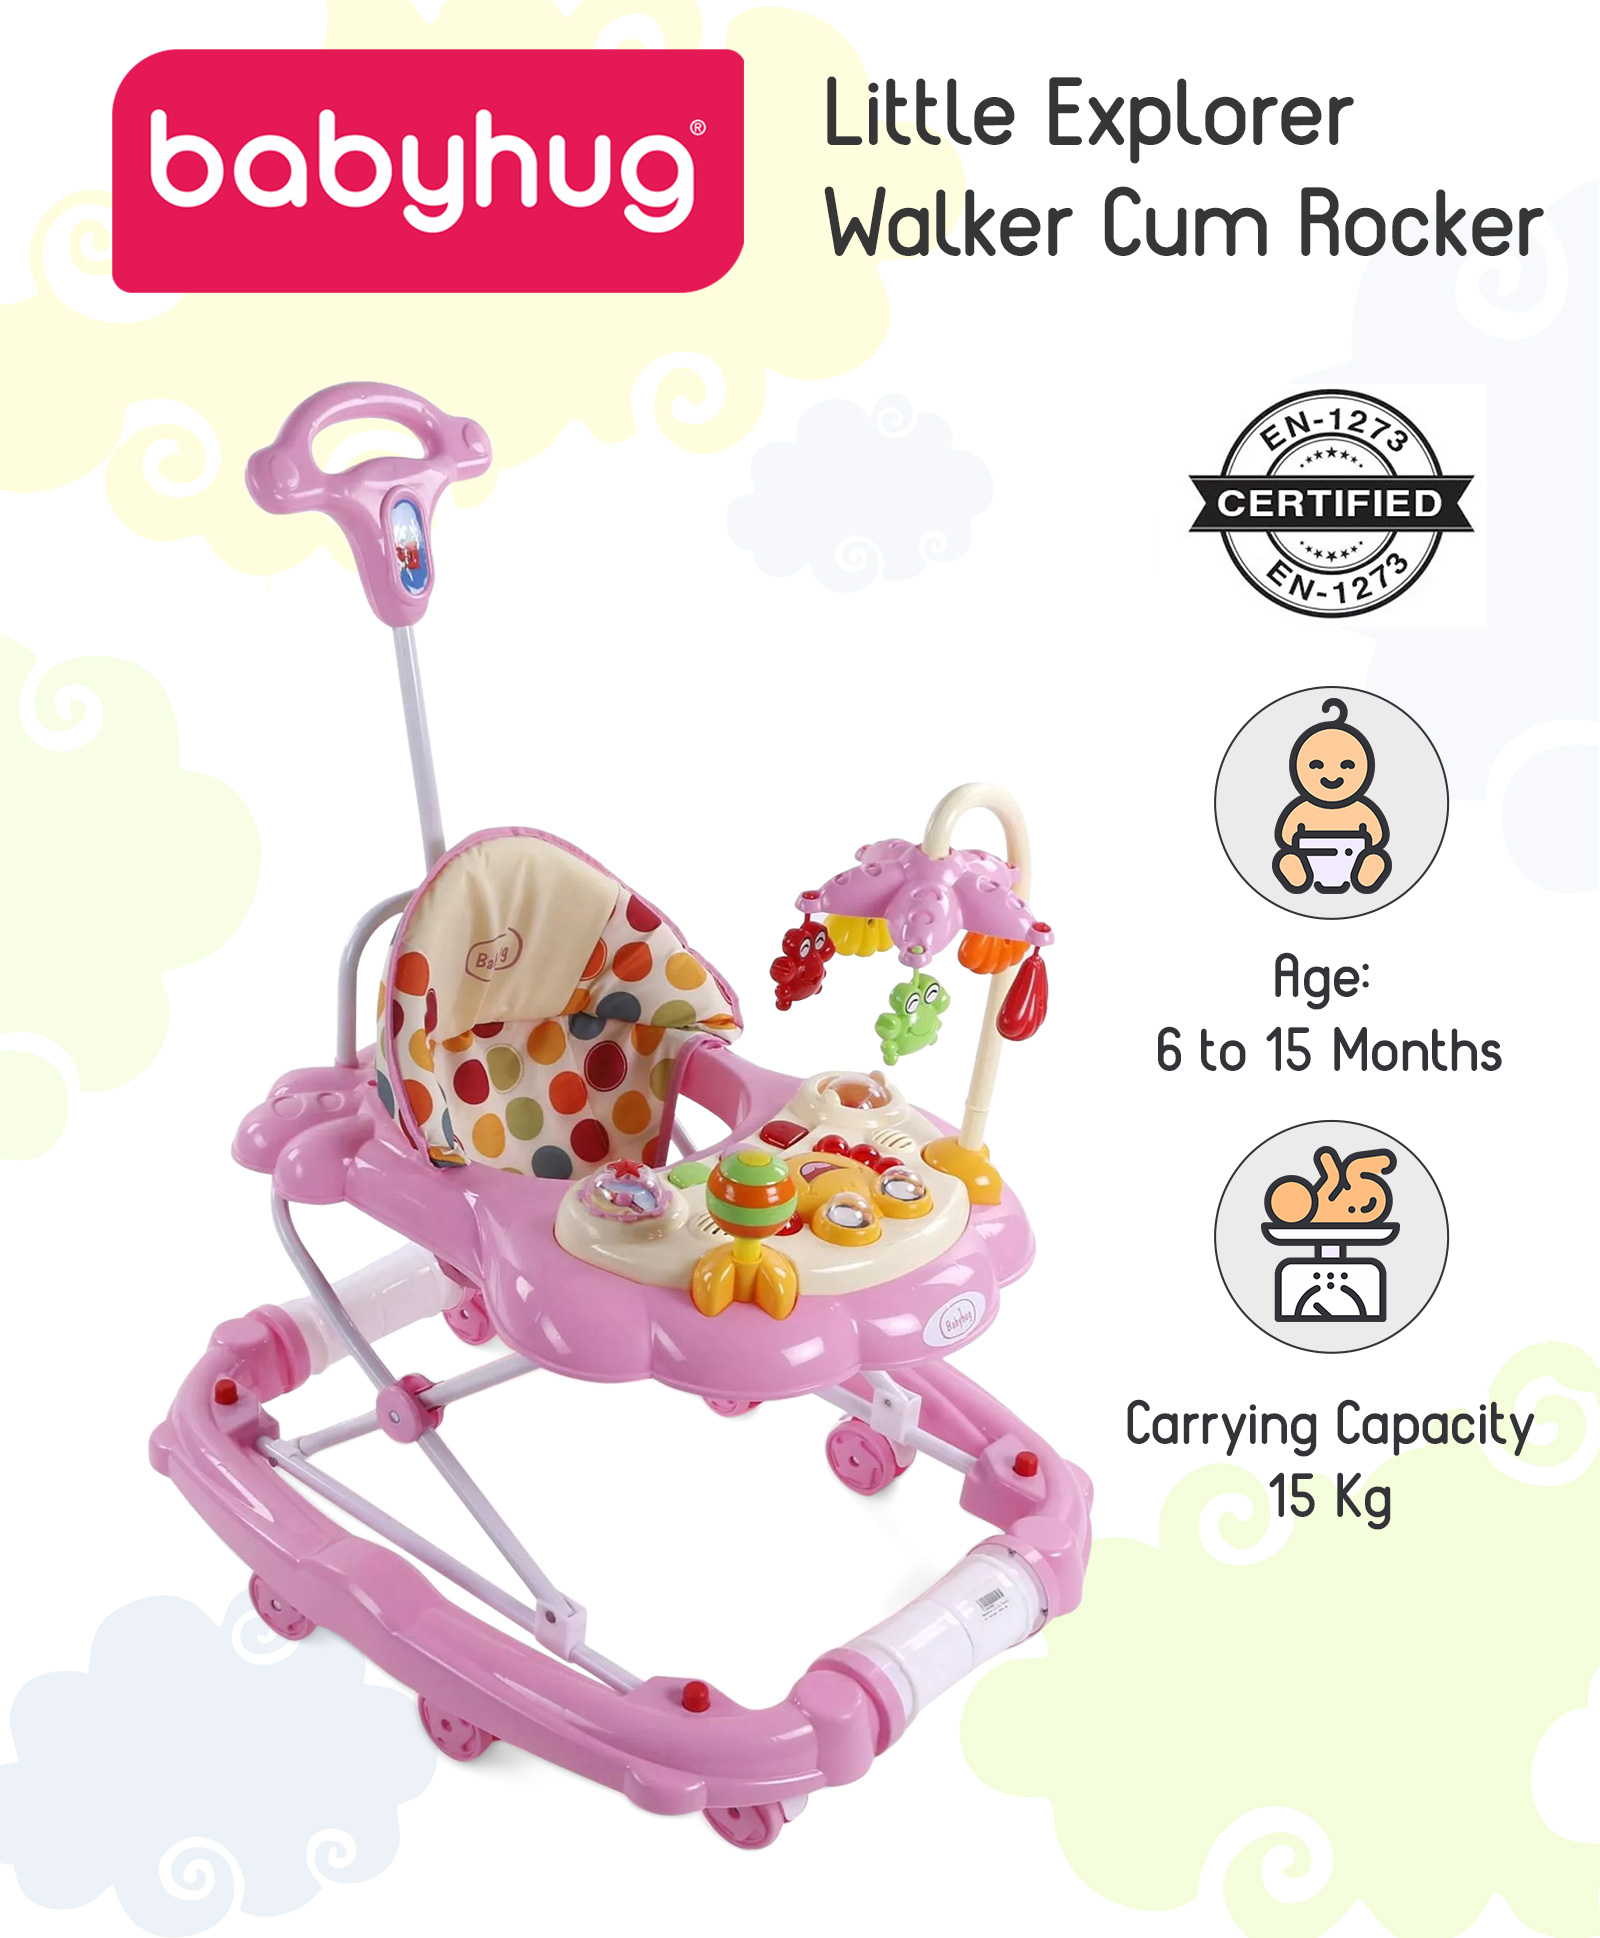 firstcry babyhug walker